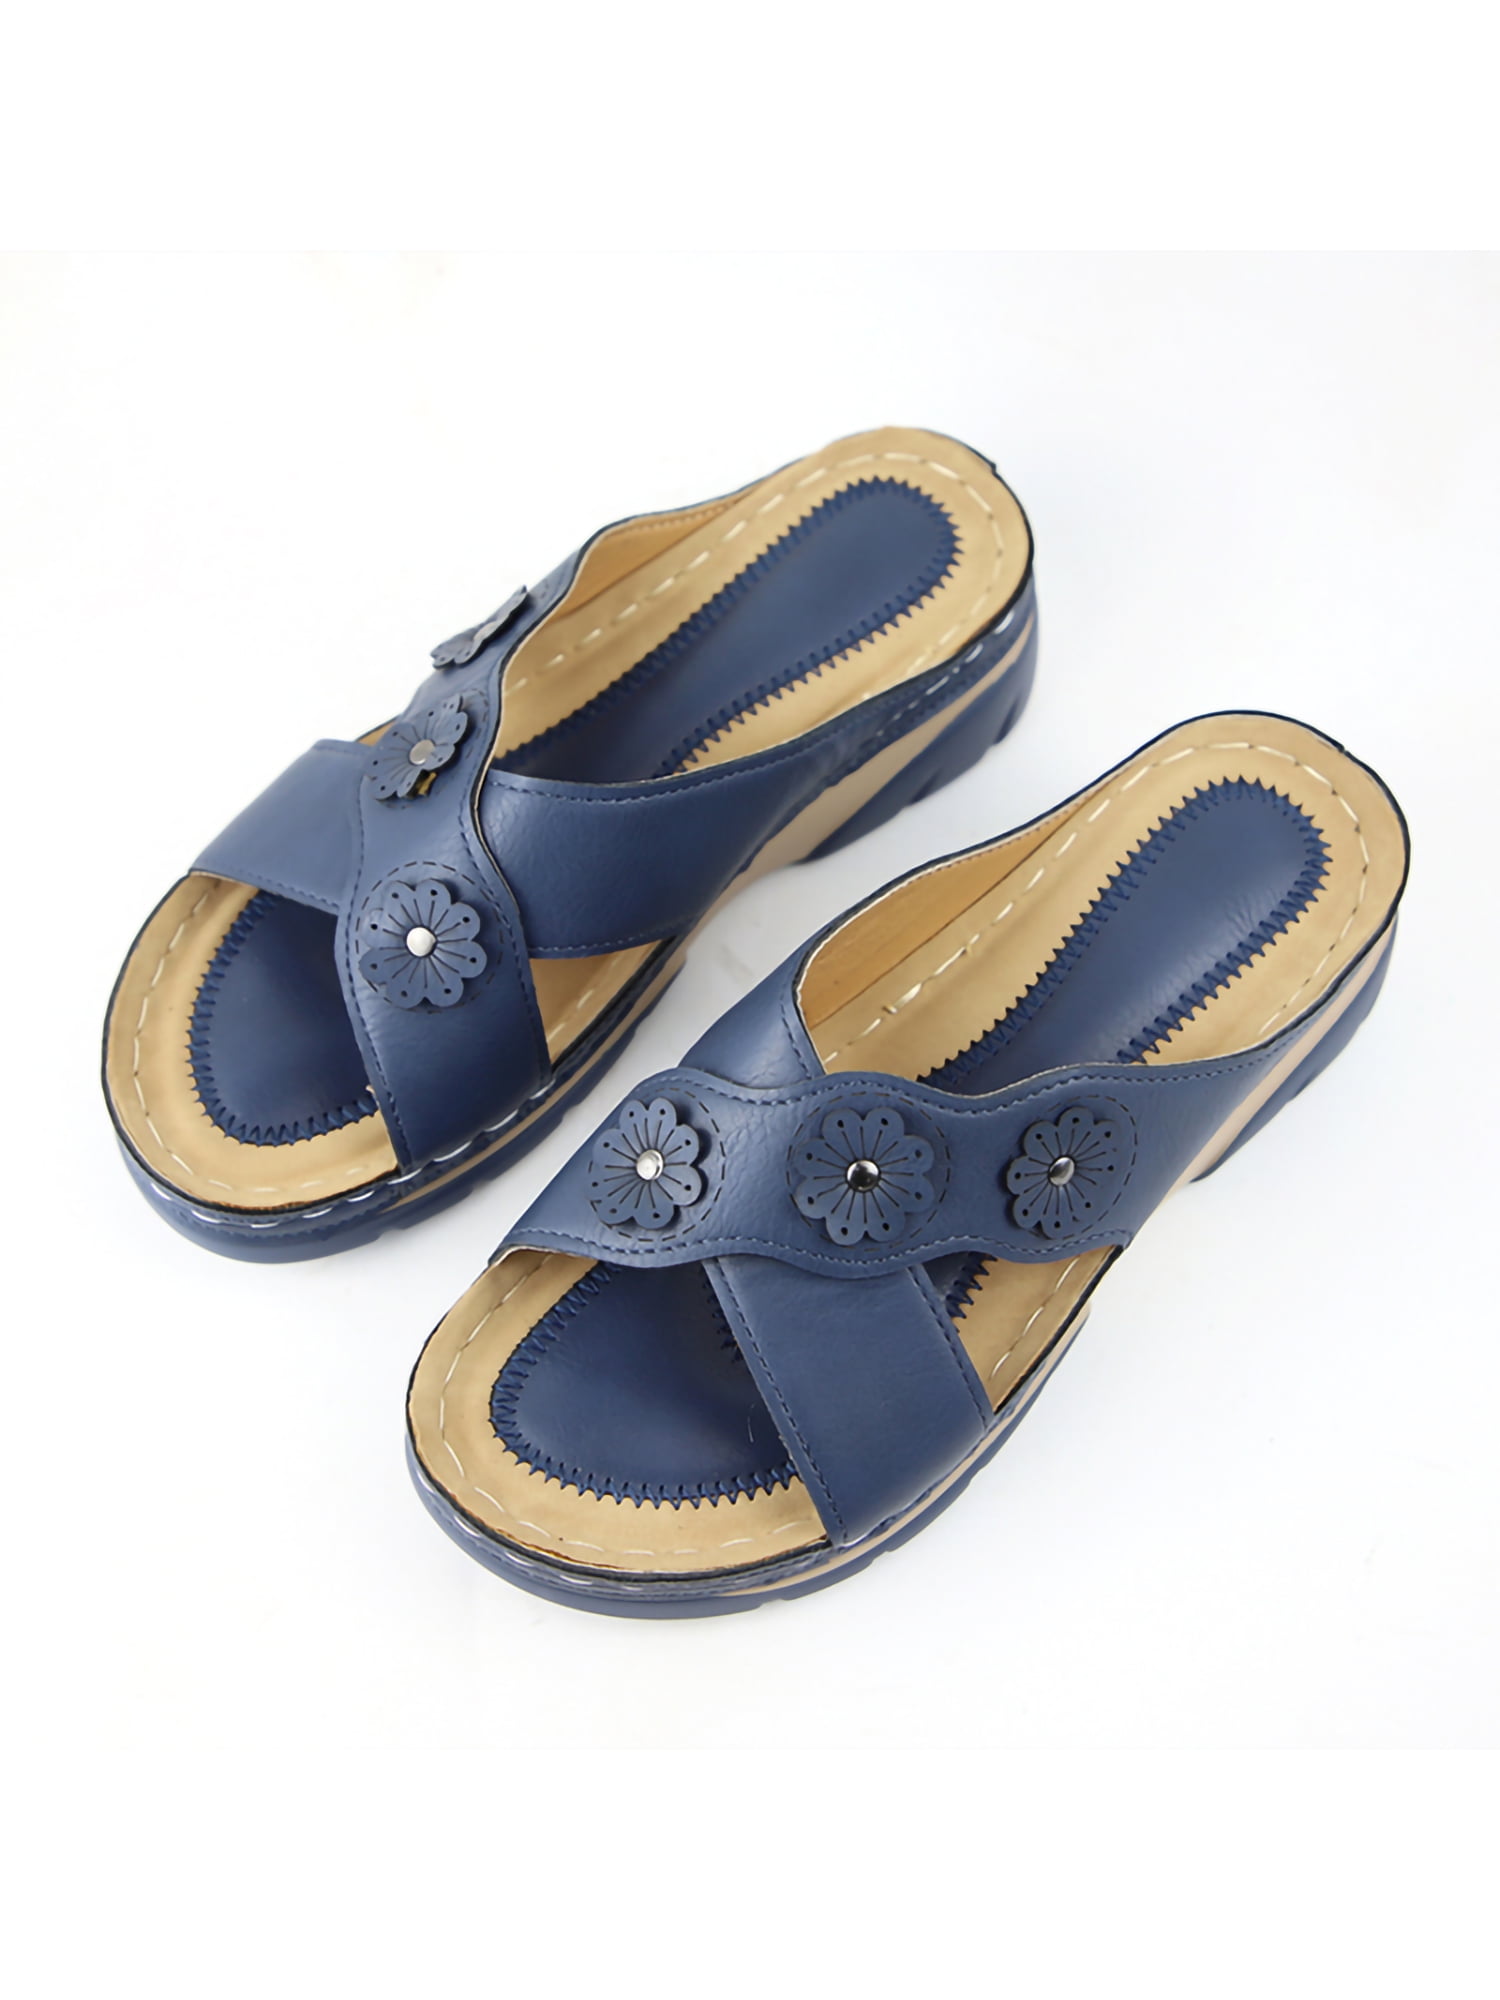 Mens Sandals Memory Foam Touch Fastening Open Toe Flip Flop Mules Summer Shoes 